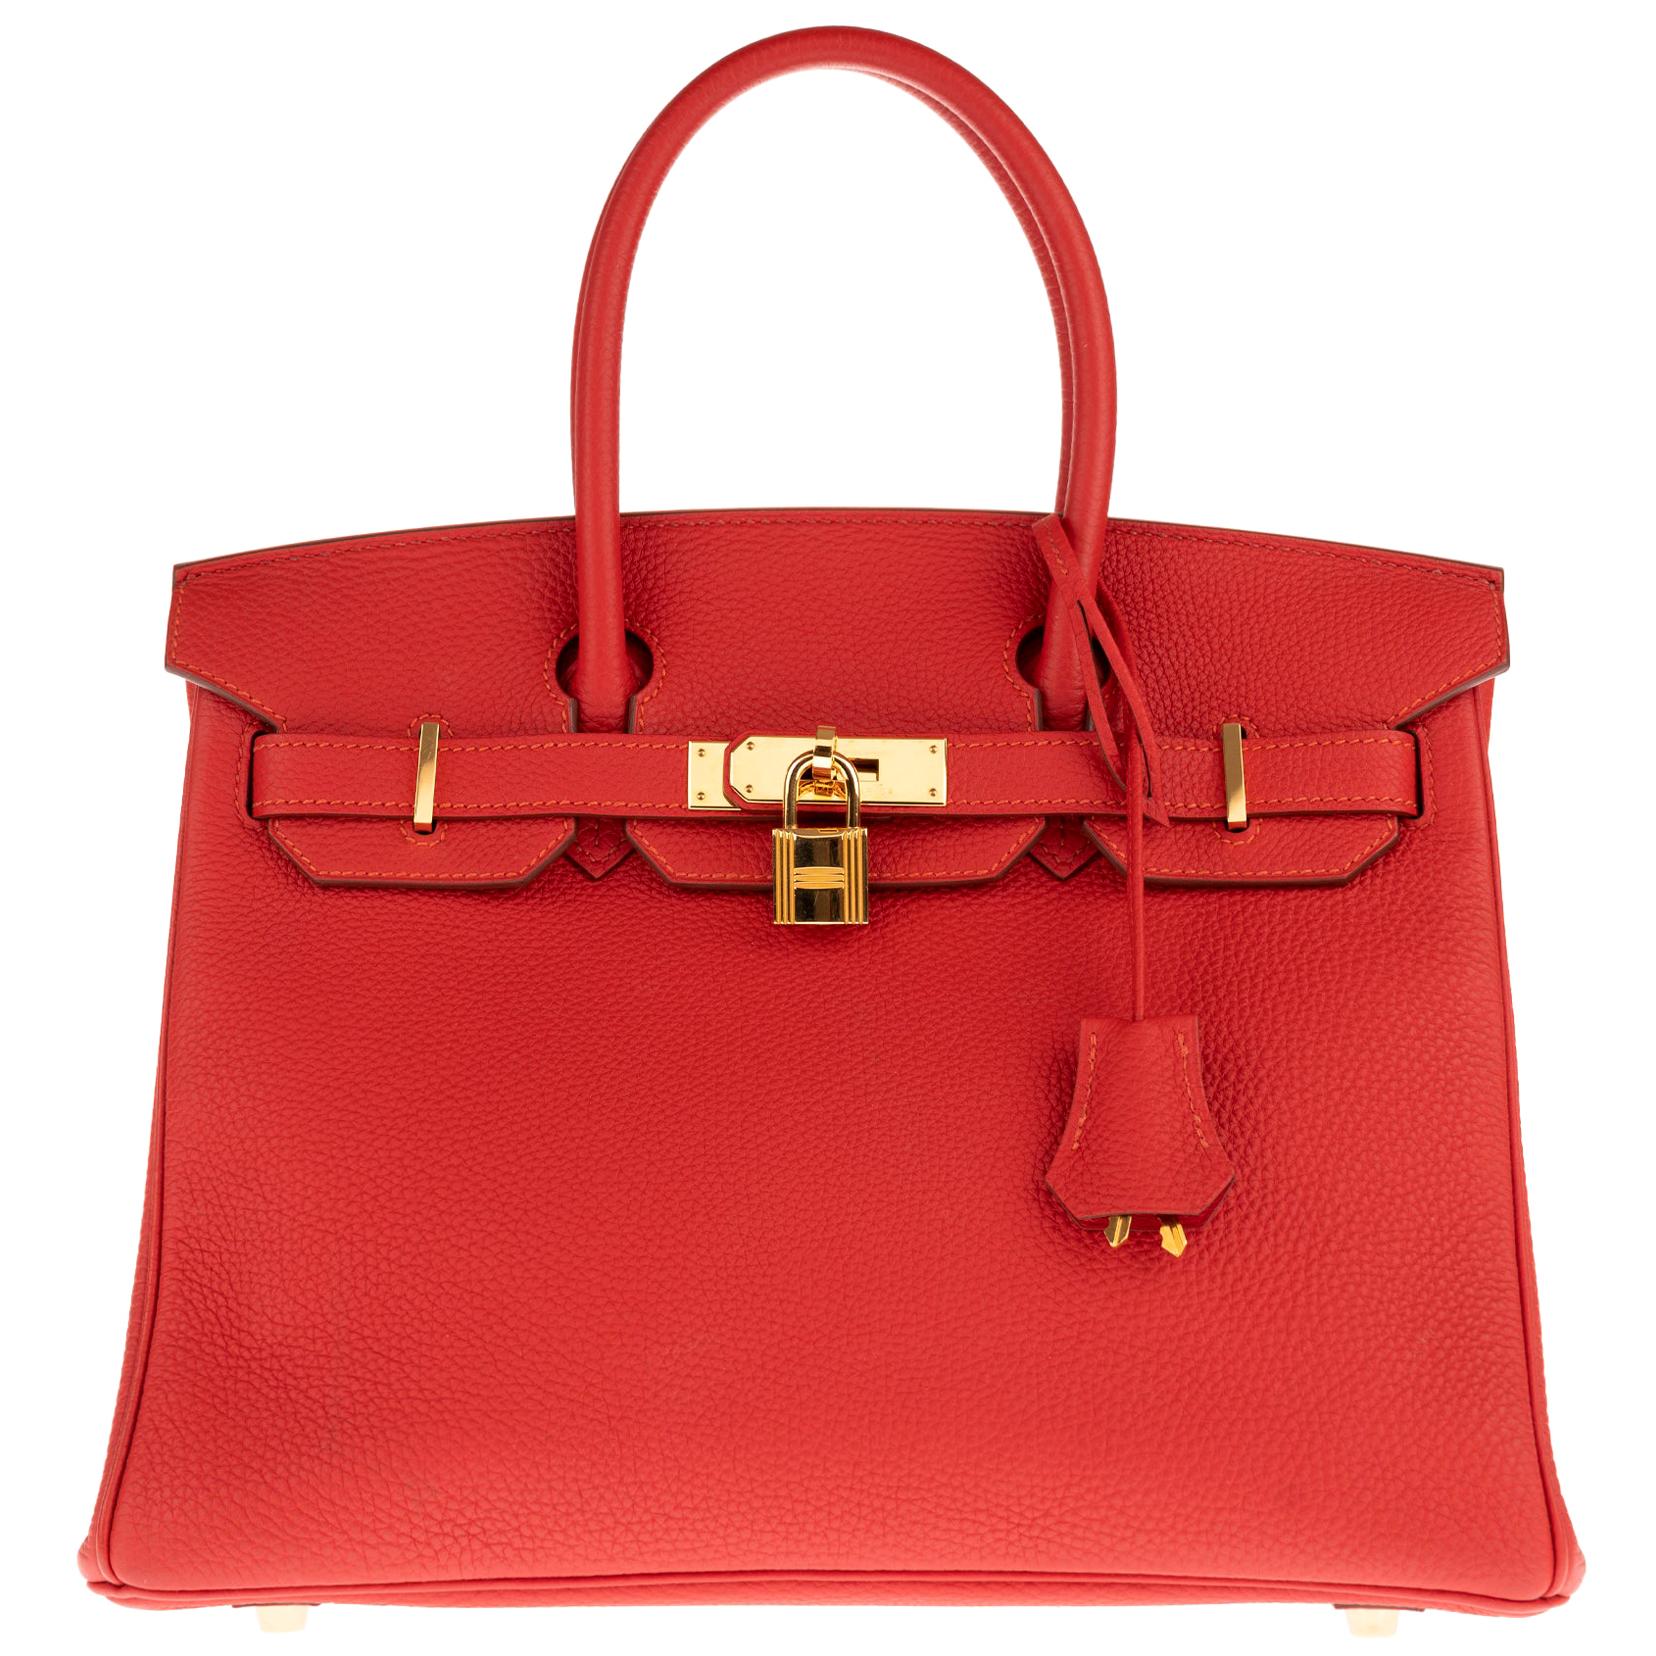 Beautiful Hermès Birkin 30 handbag in Red Togo leather, gold hardware 